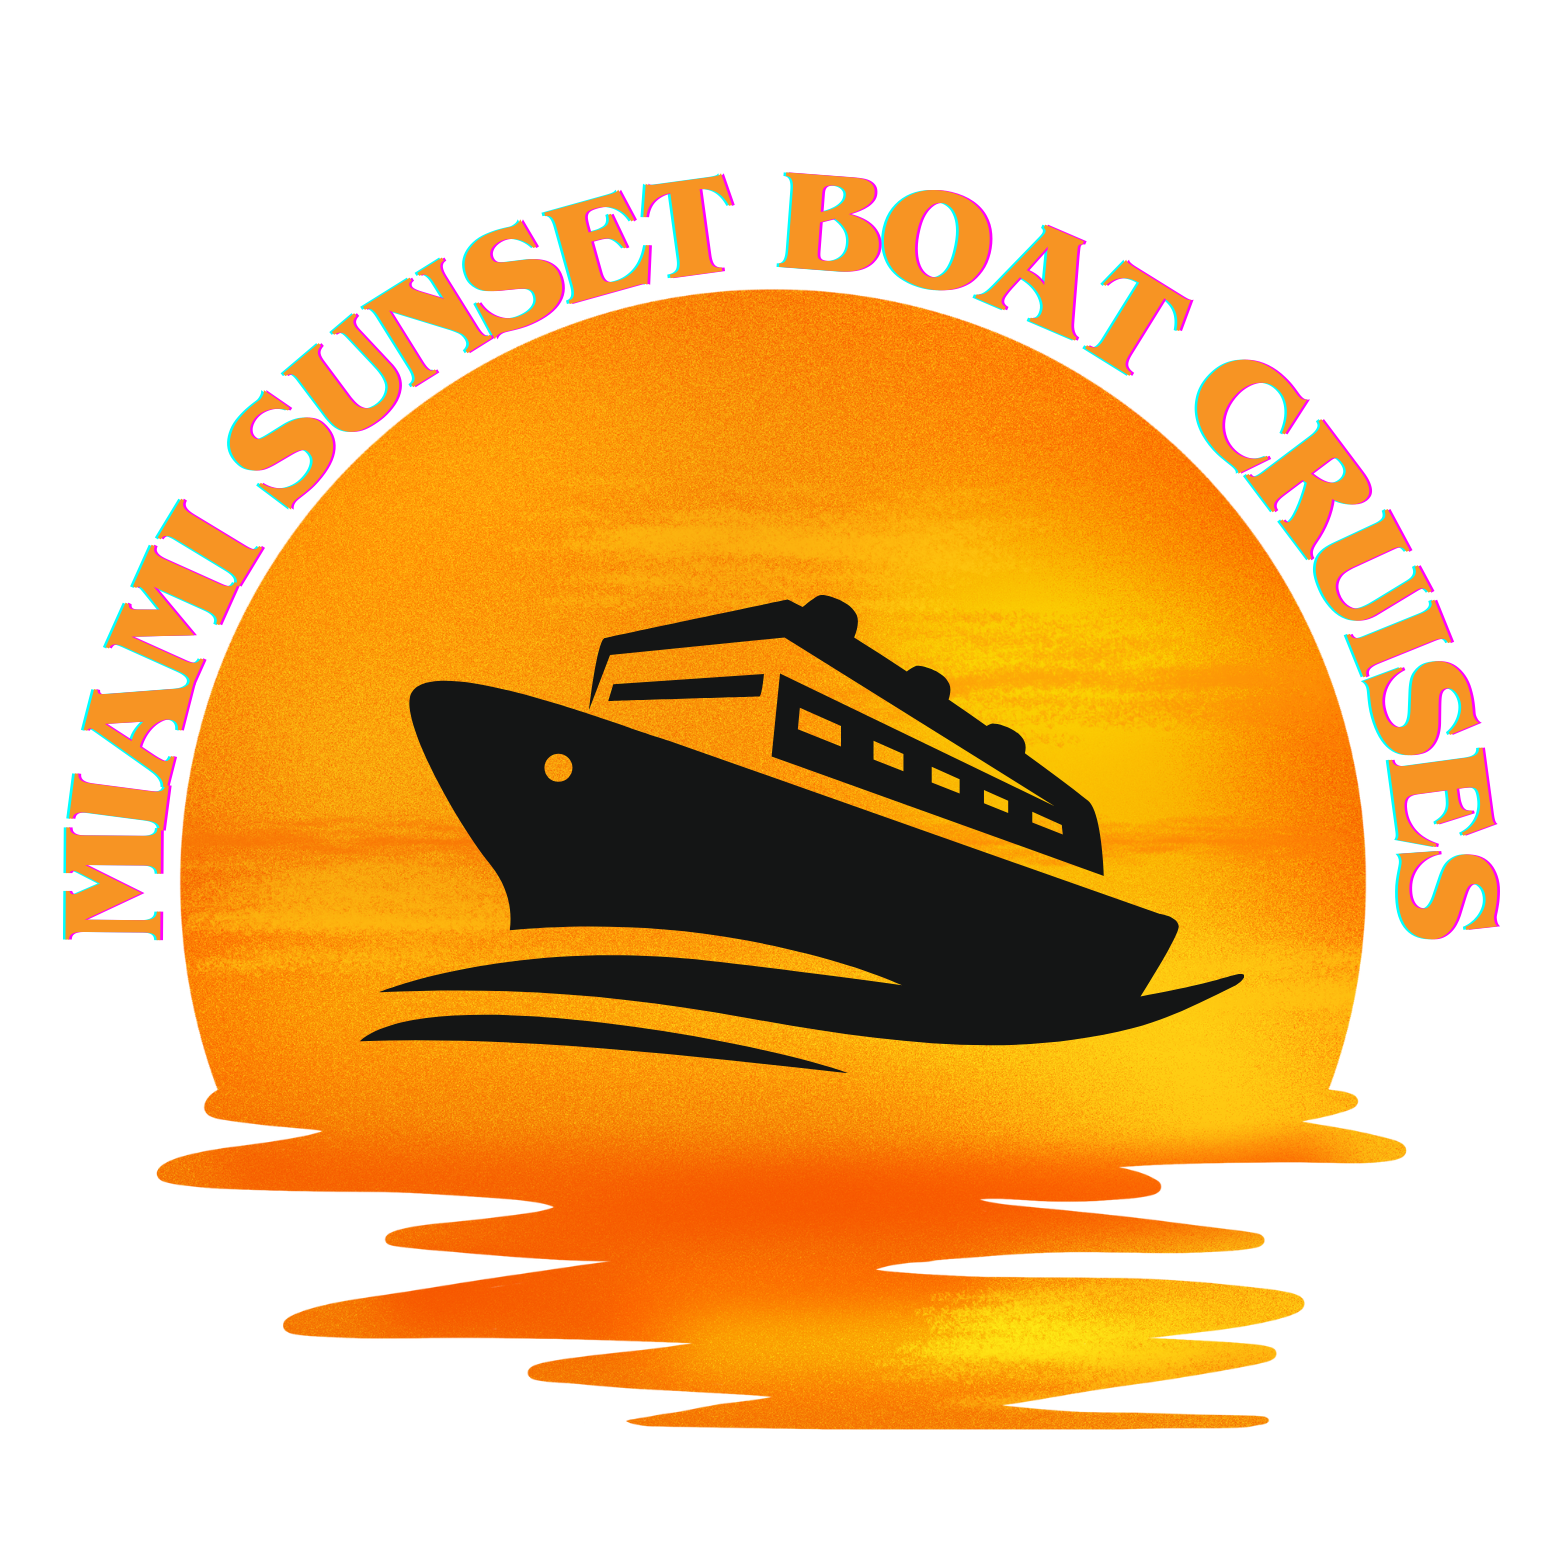 Miami Sunset Boat Cruises